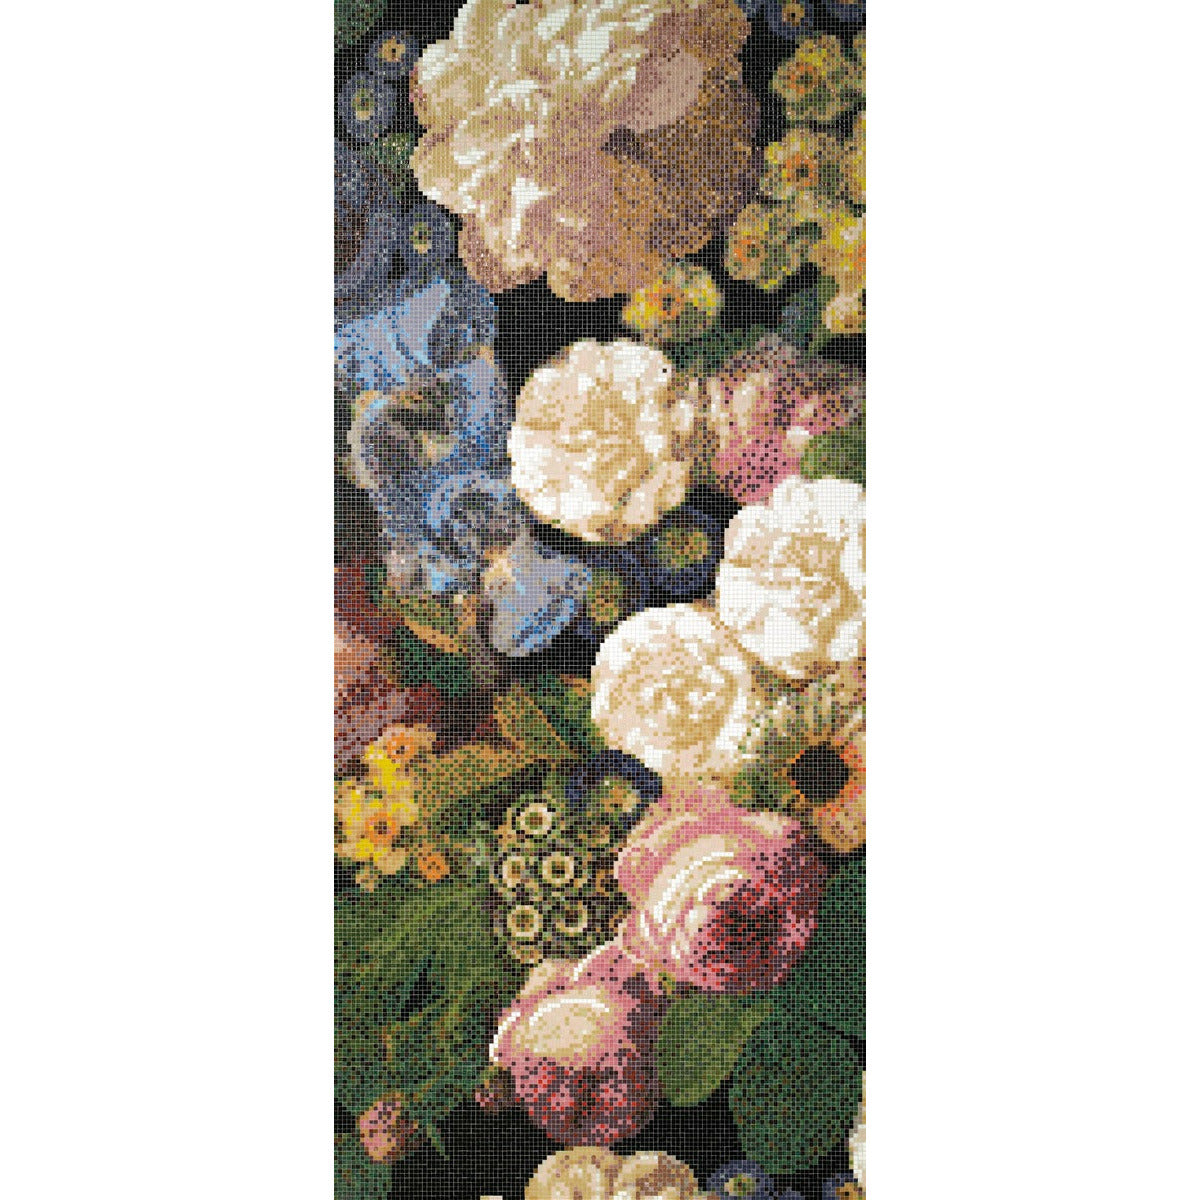 Bisazza Decorations 'Bouquet' Italian Glass Mosaic Tiles-7053